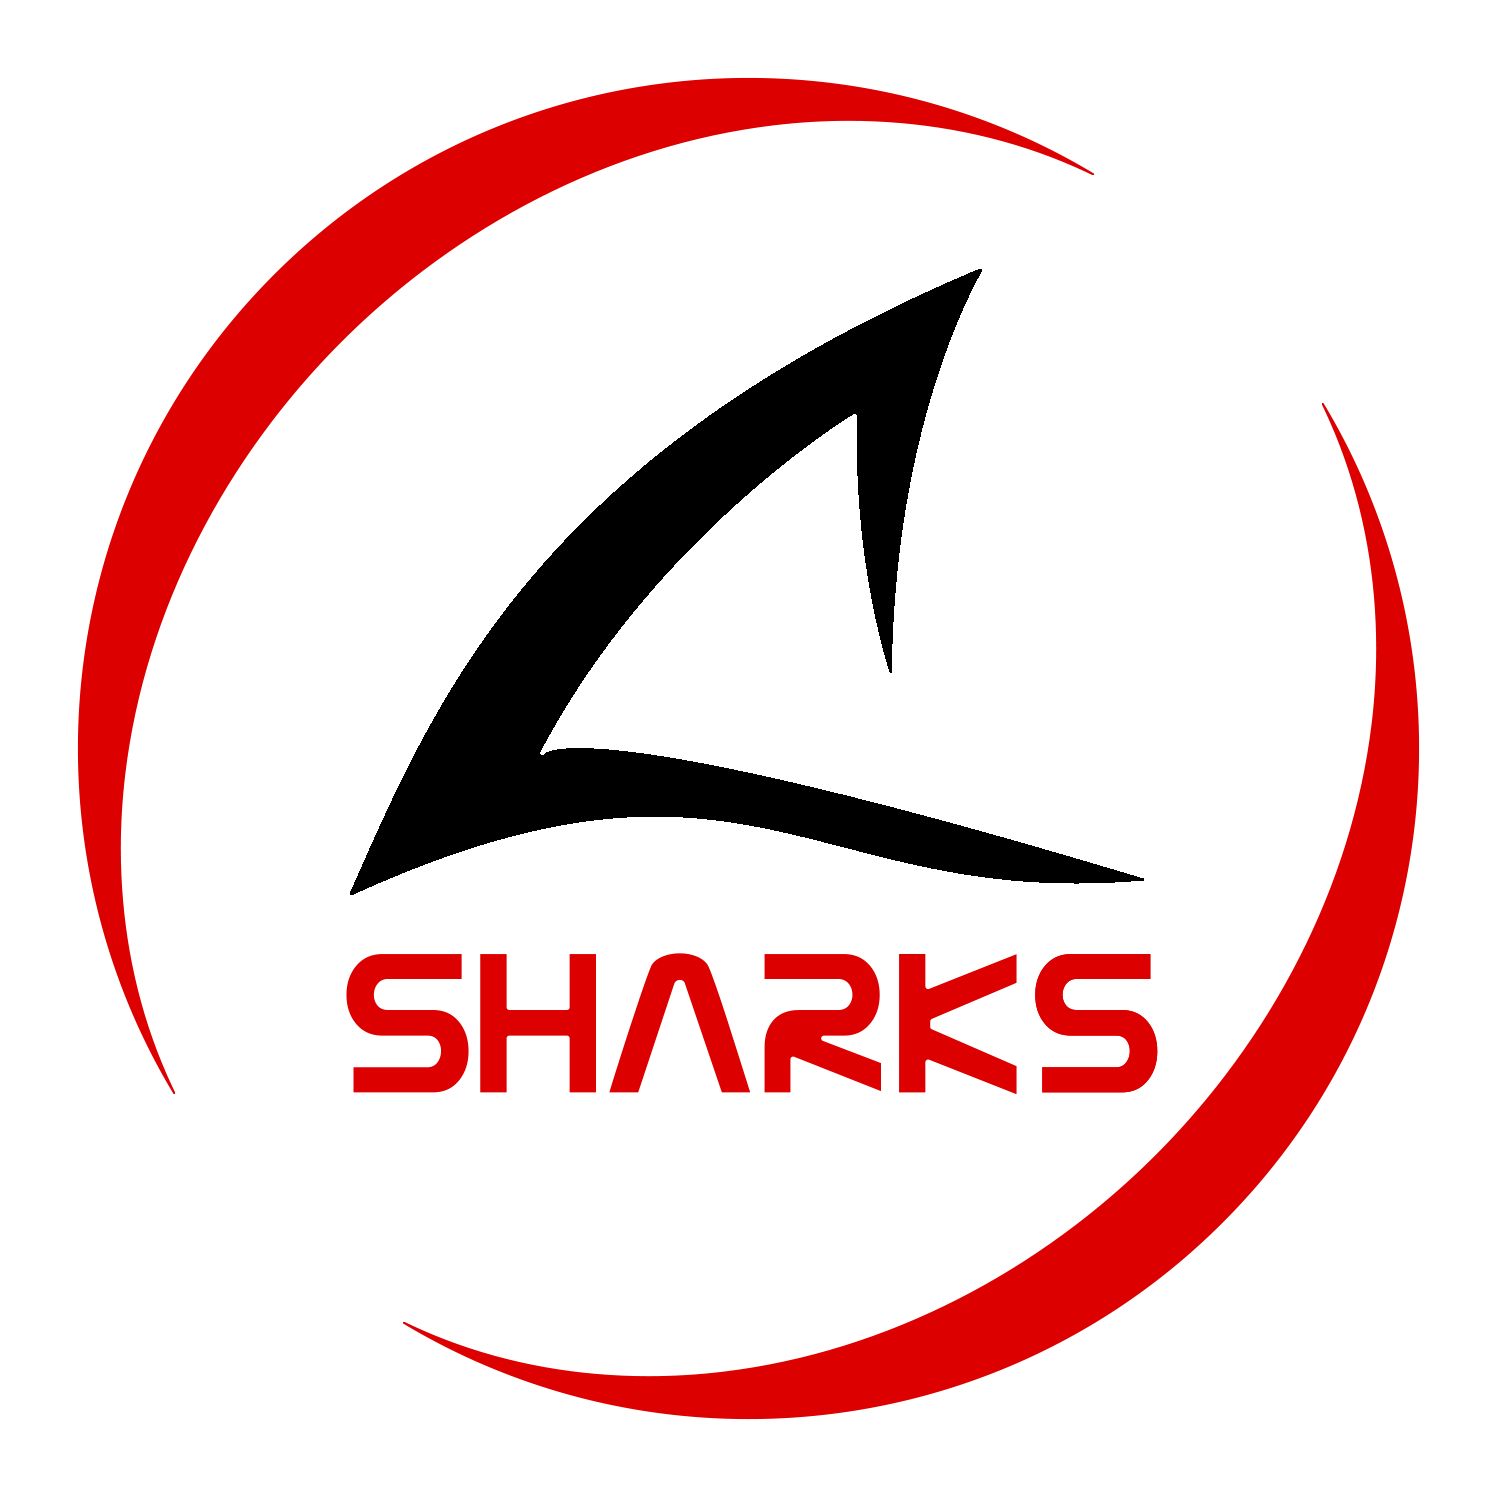 Sharks Monza IT